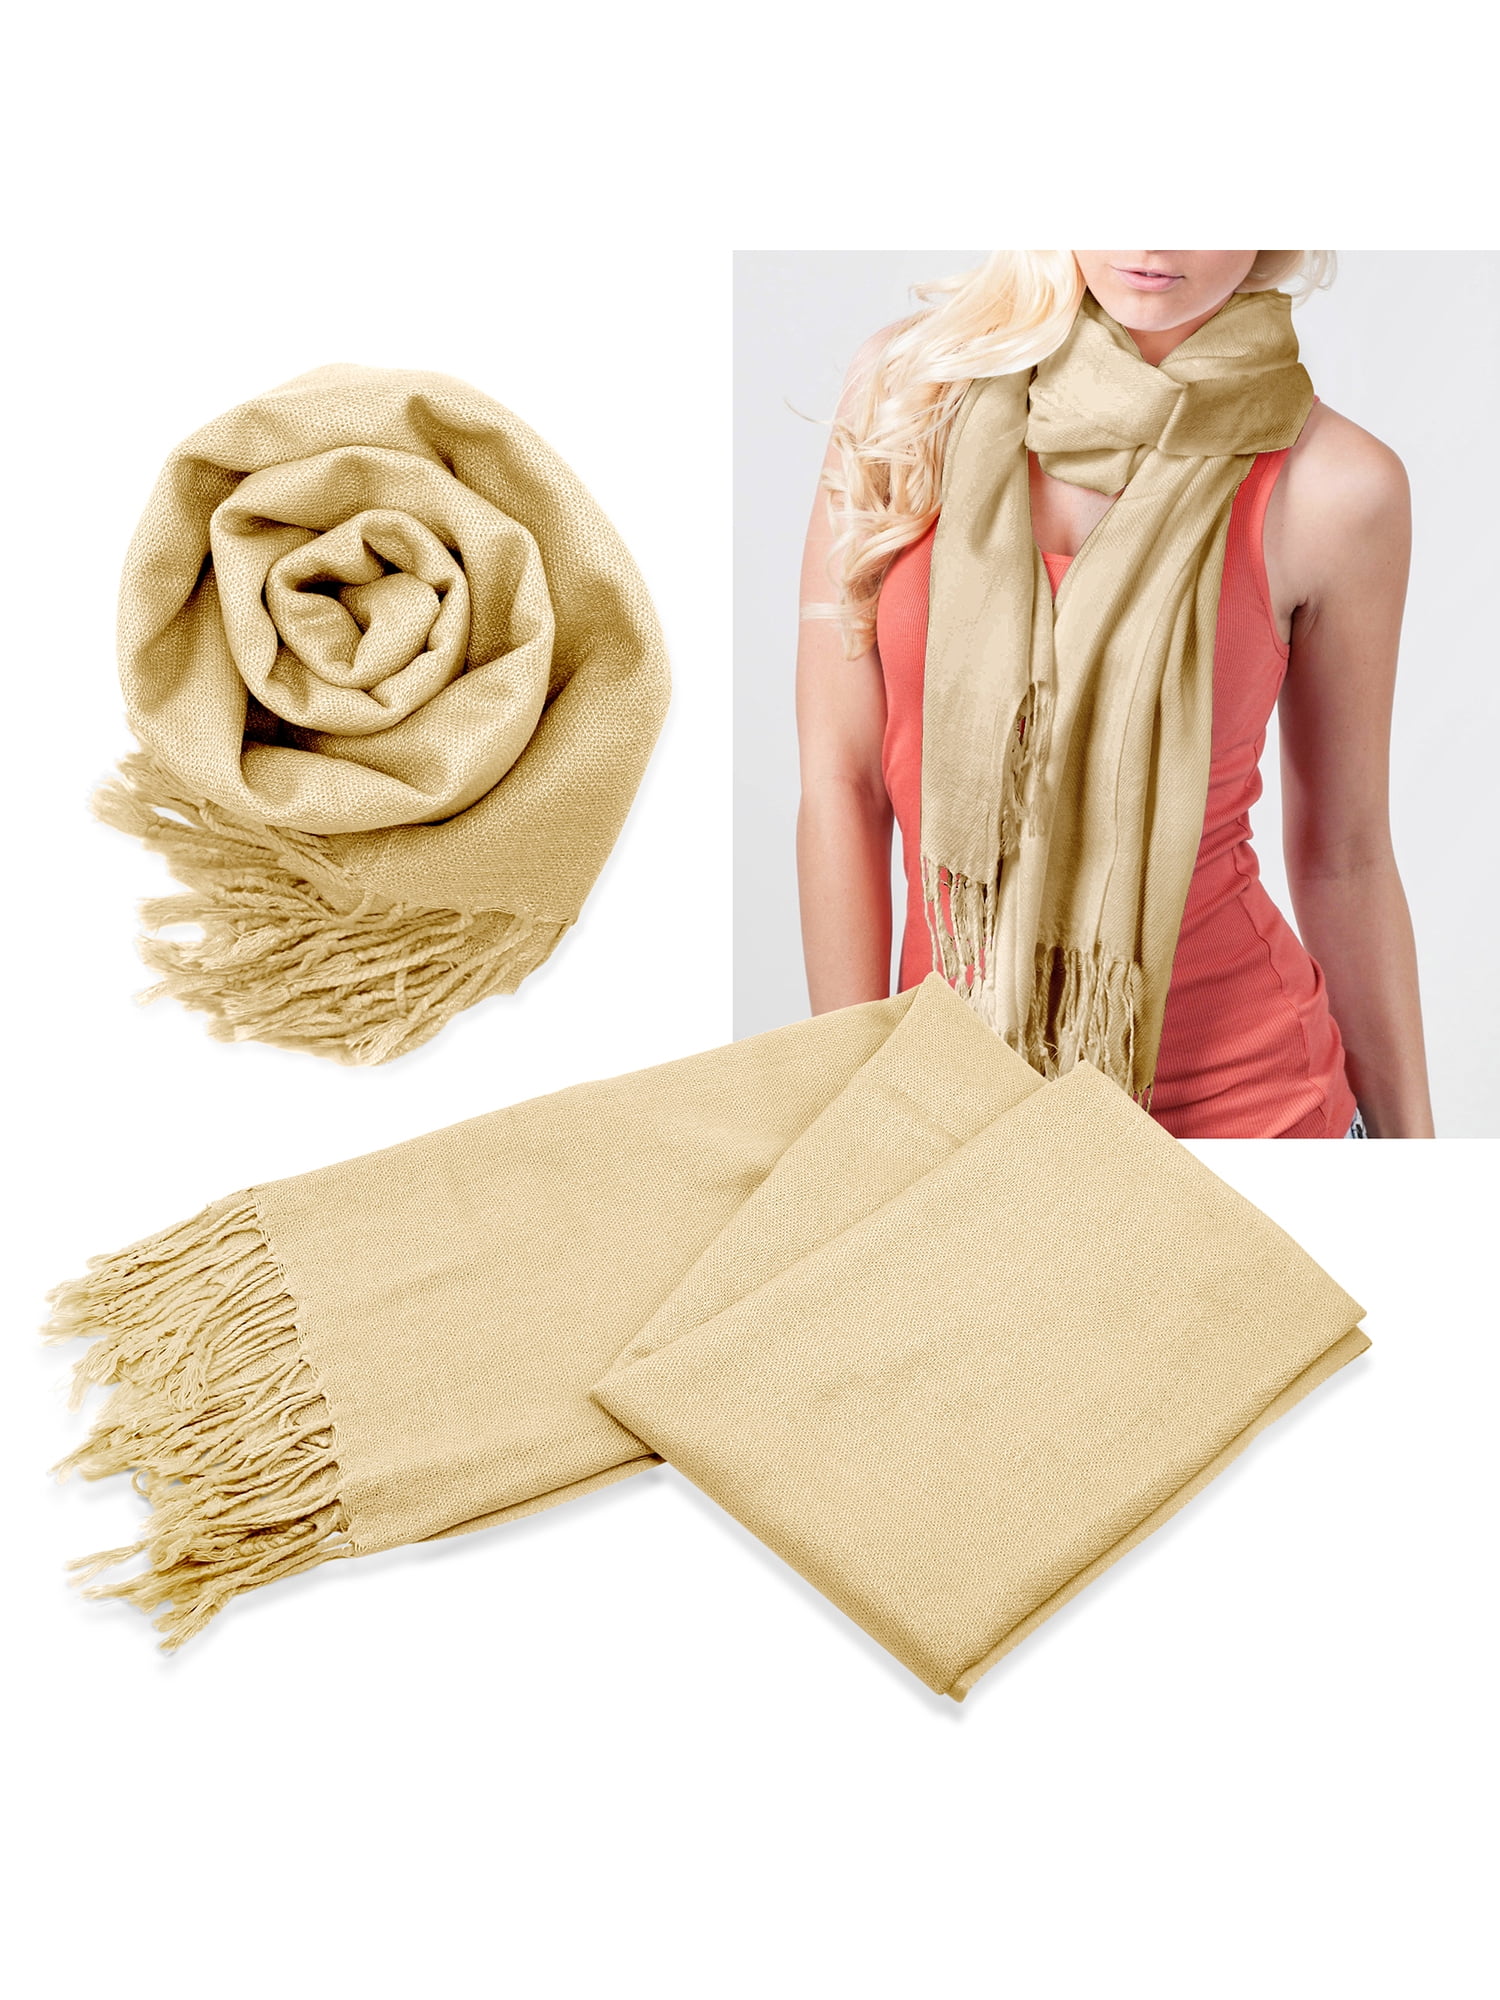 New Women's Fashion Flower 100% Cashmere Pashmina Soft Warm Wrap Shawl Scarf 